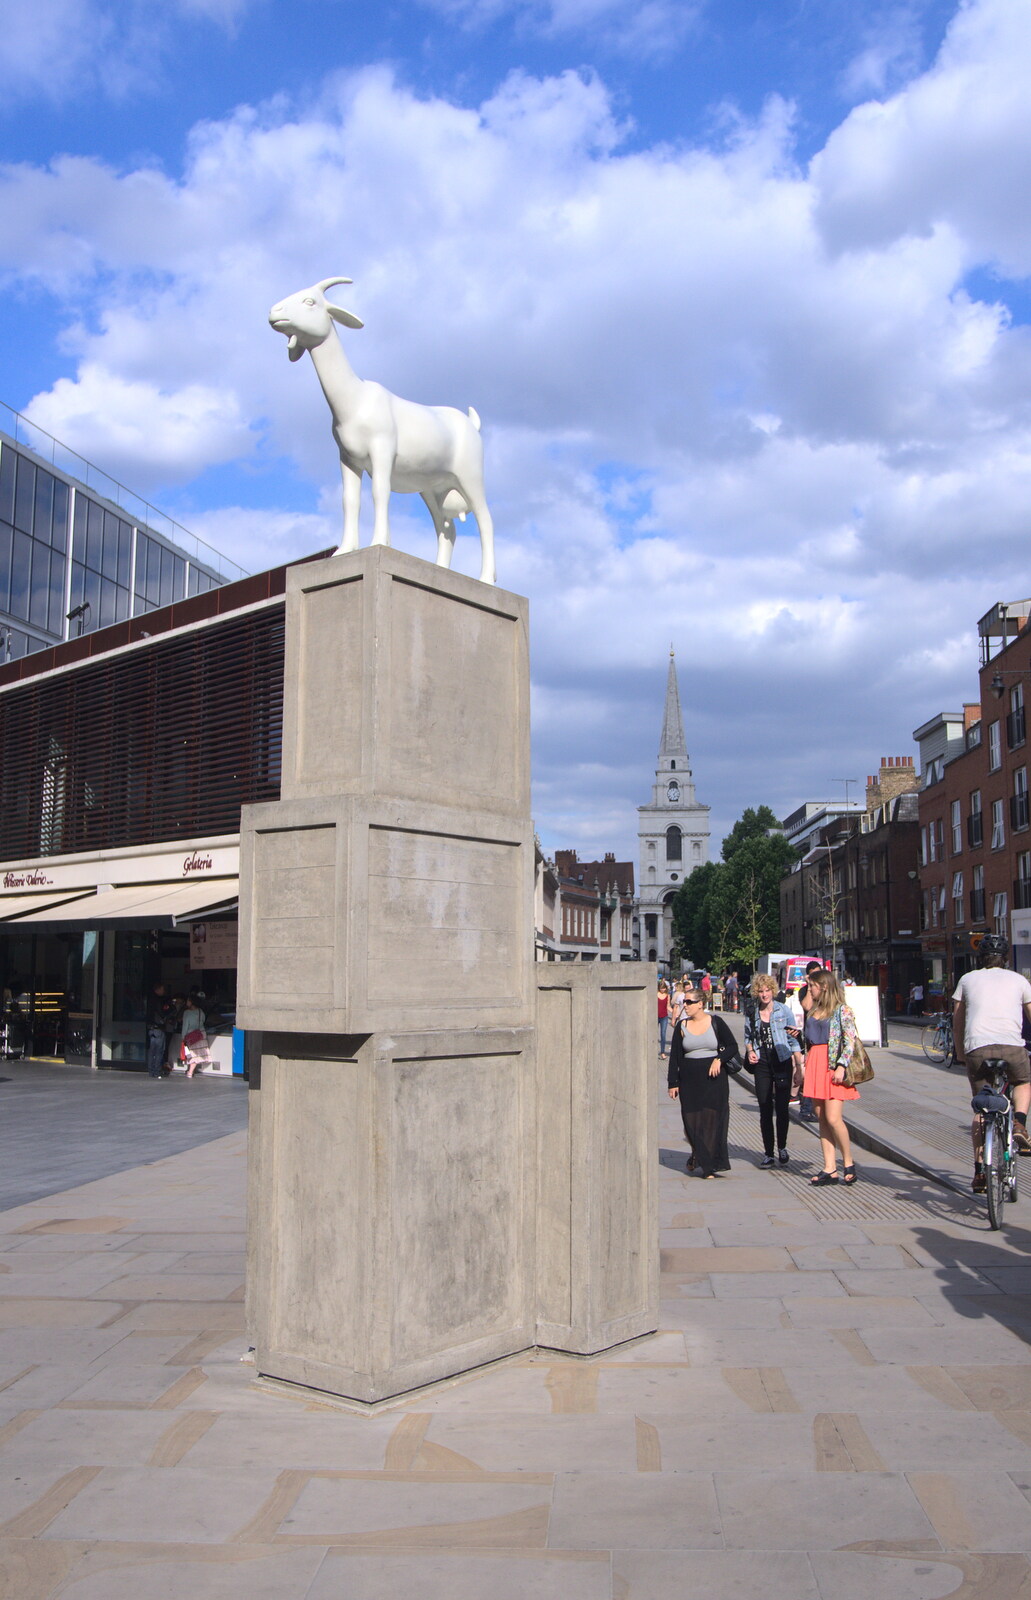 The Spitalfields goat from Spitalfields and Brick Lane Street Art, Whitechapel, London - 10th August 2013